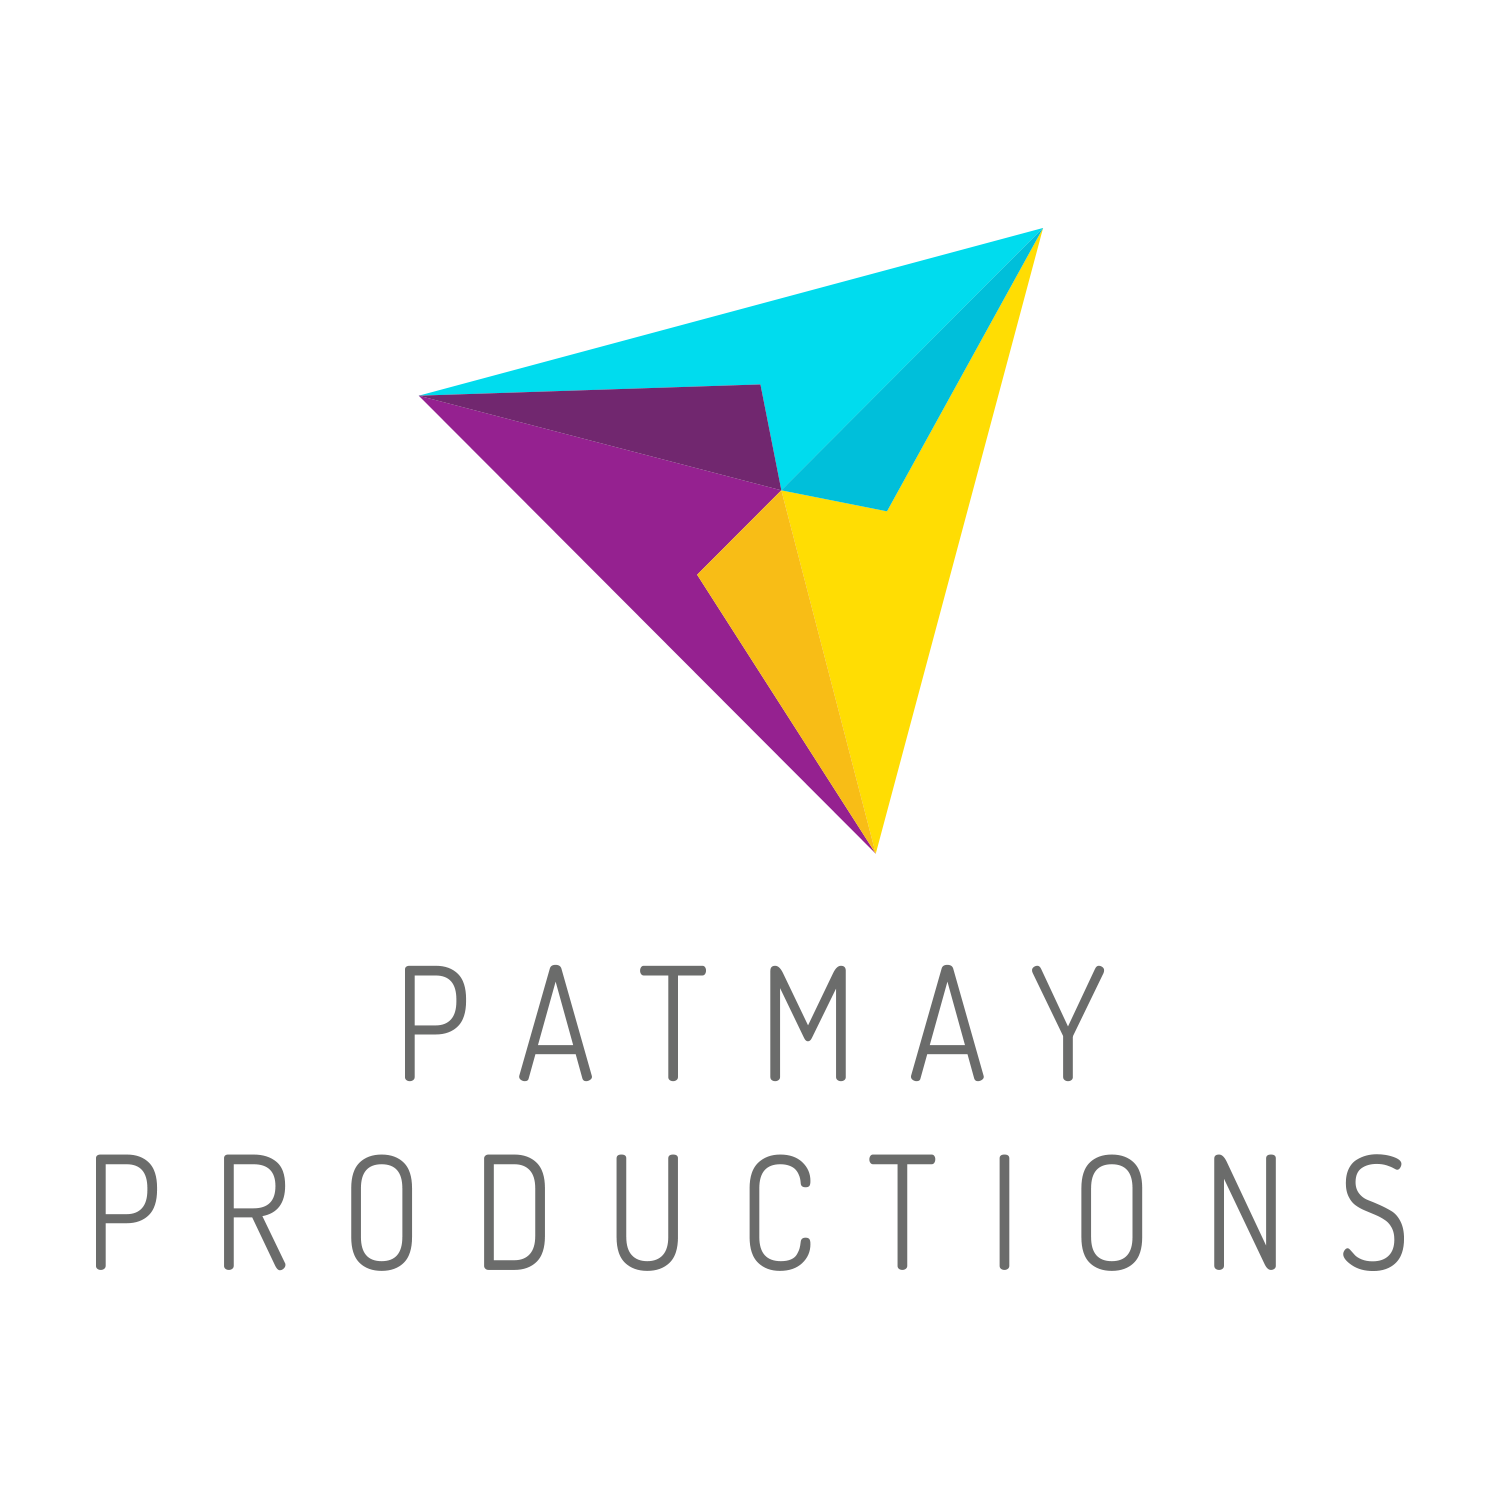 PATMAY PRODUCTIONS